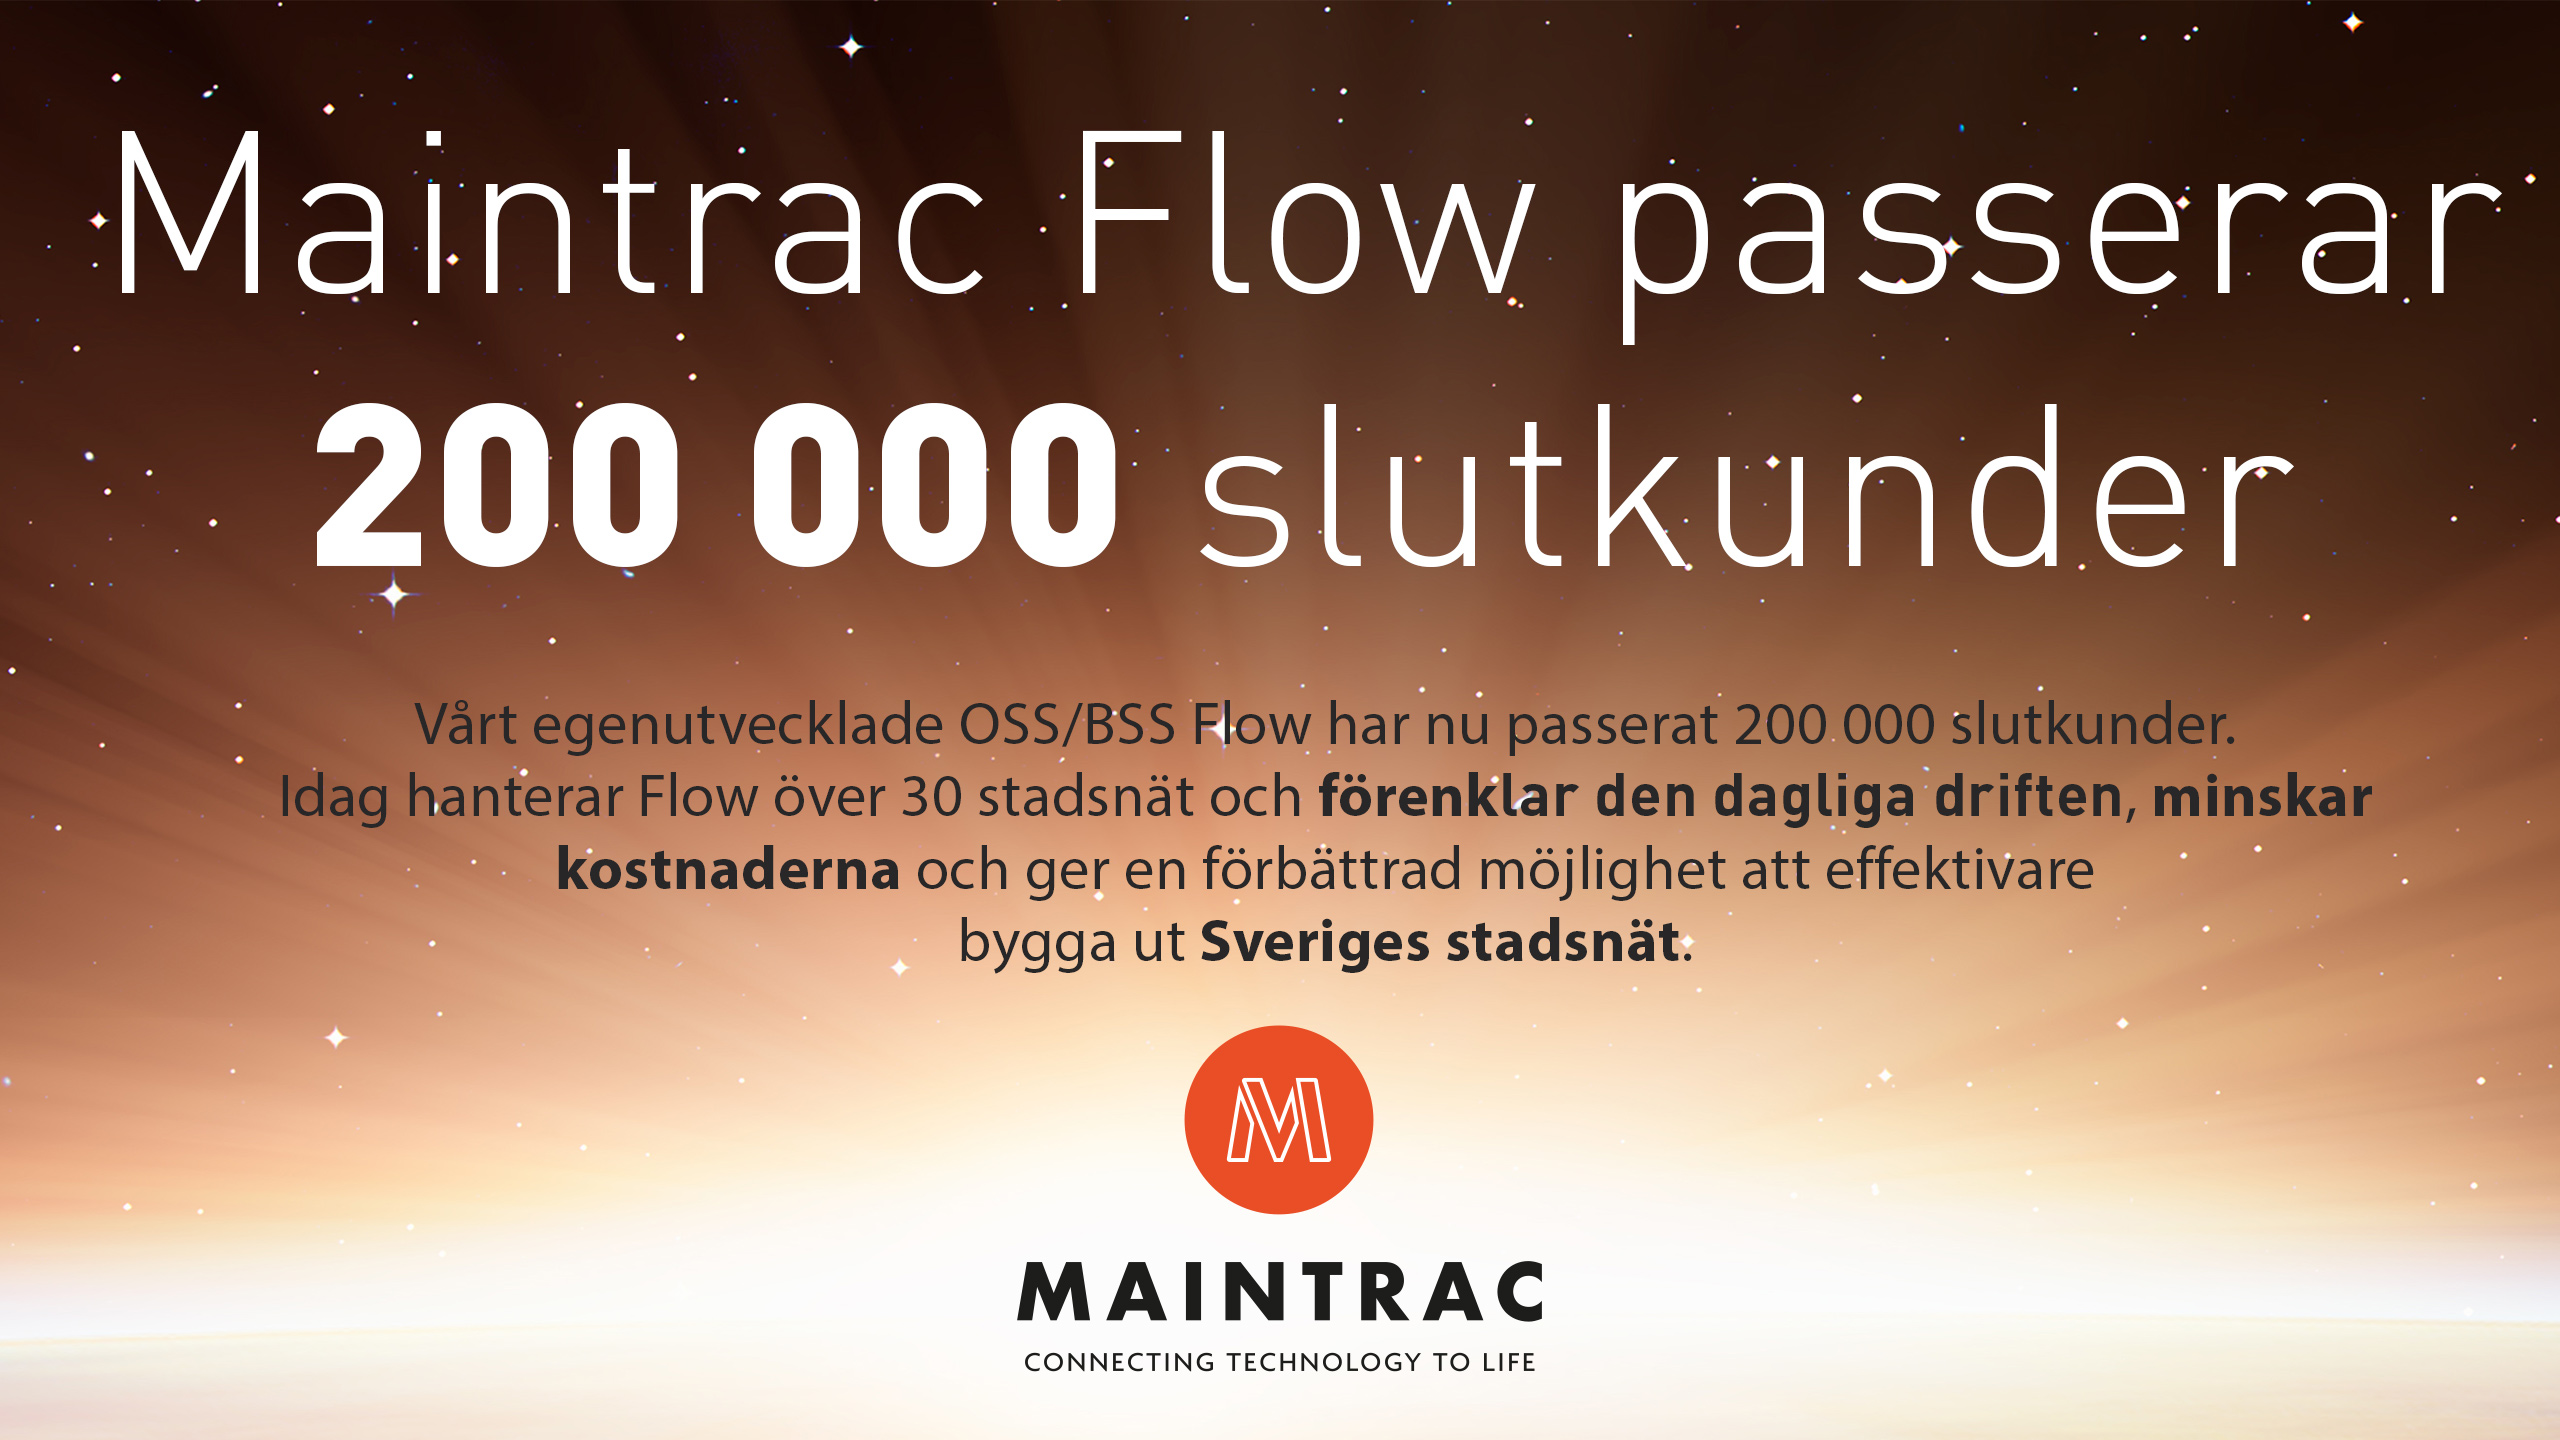 Maintrac Flow passerar 200 000 slutkunder